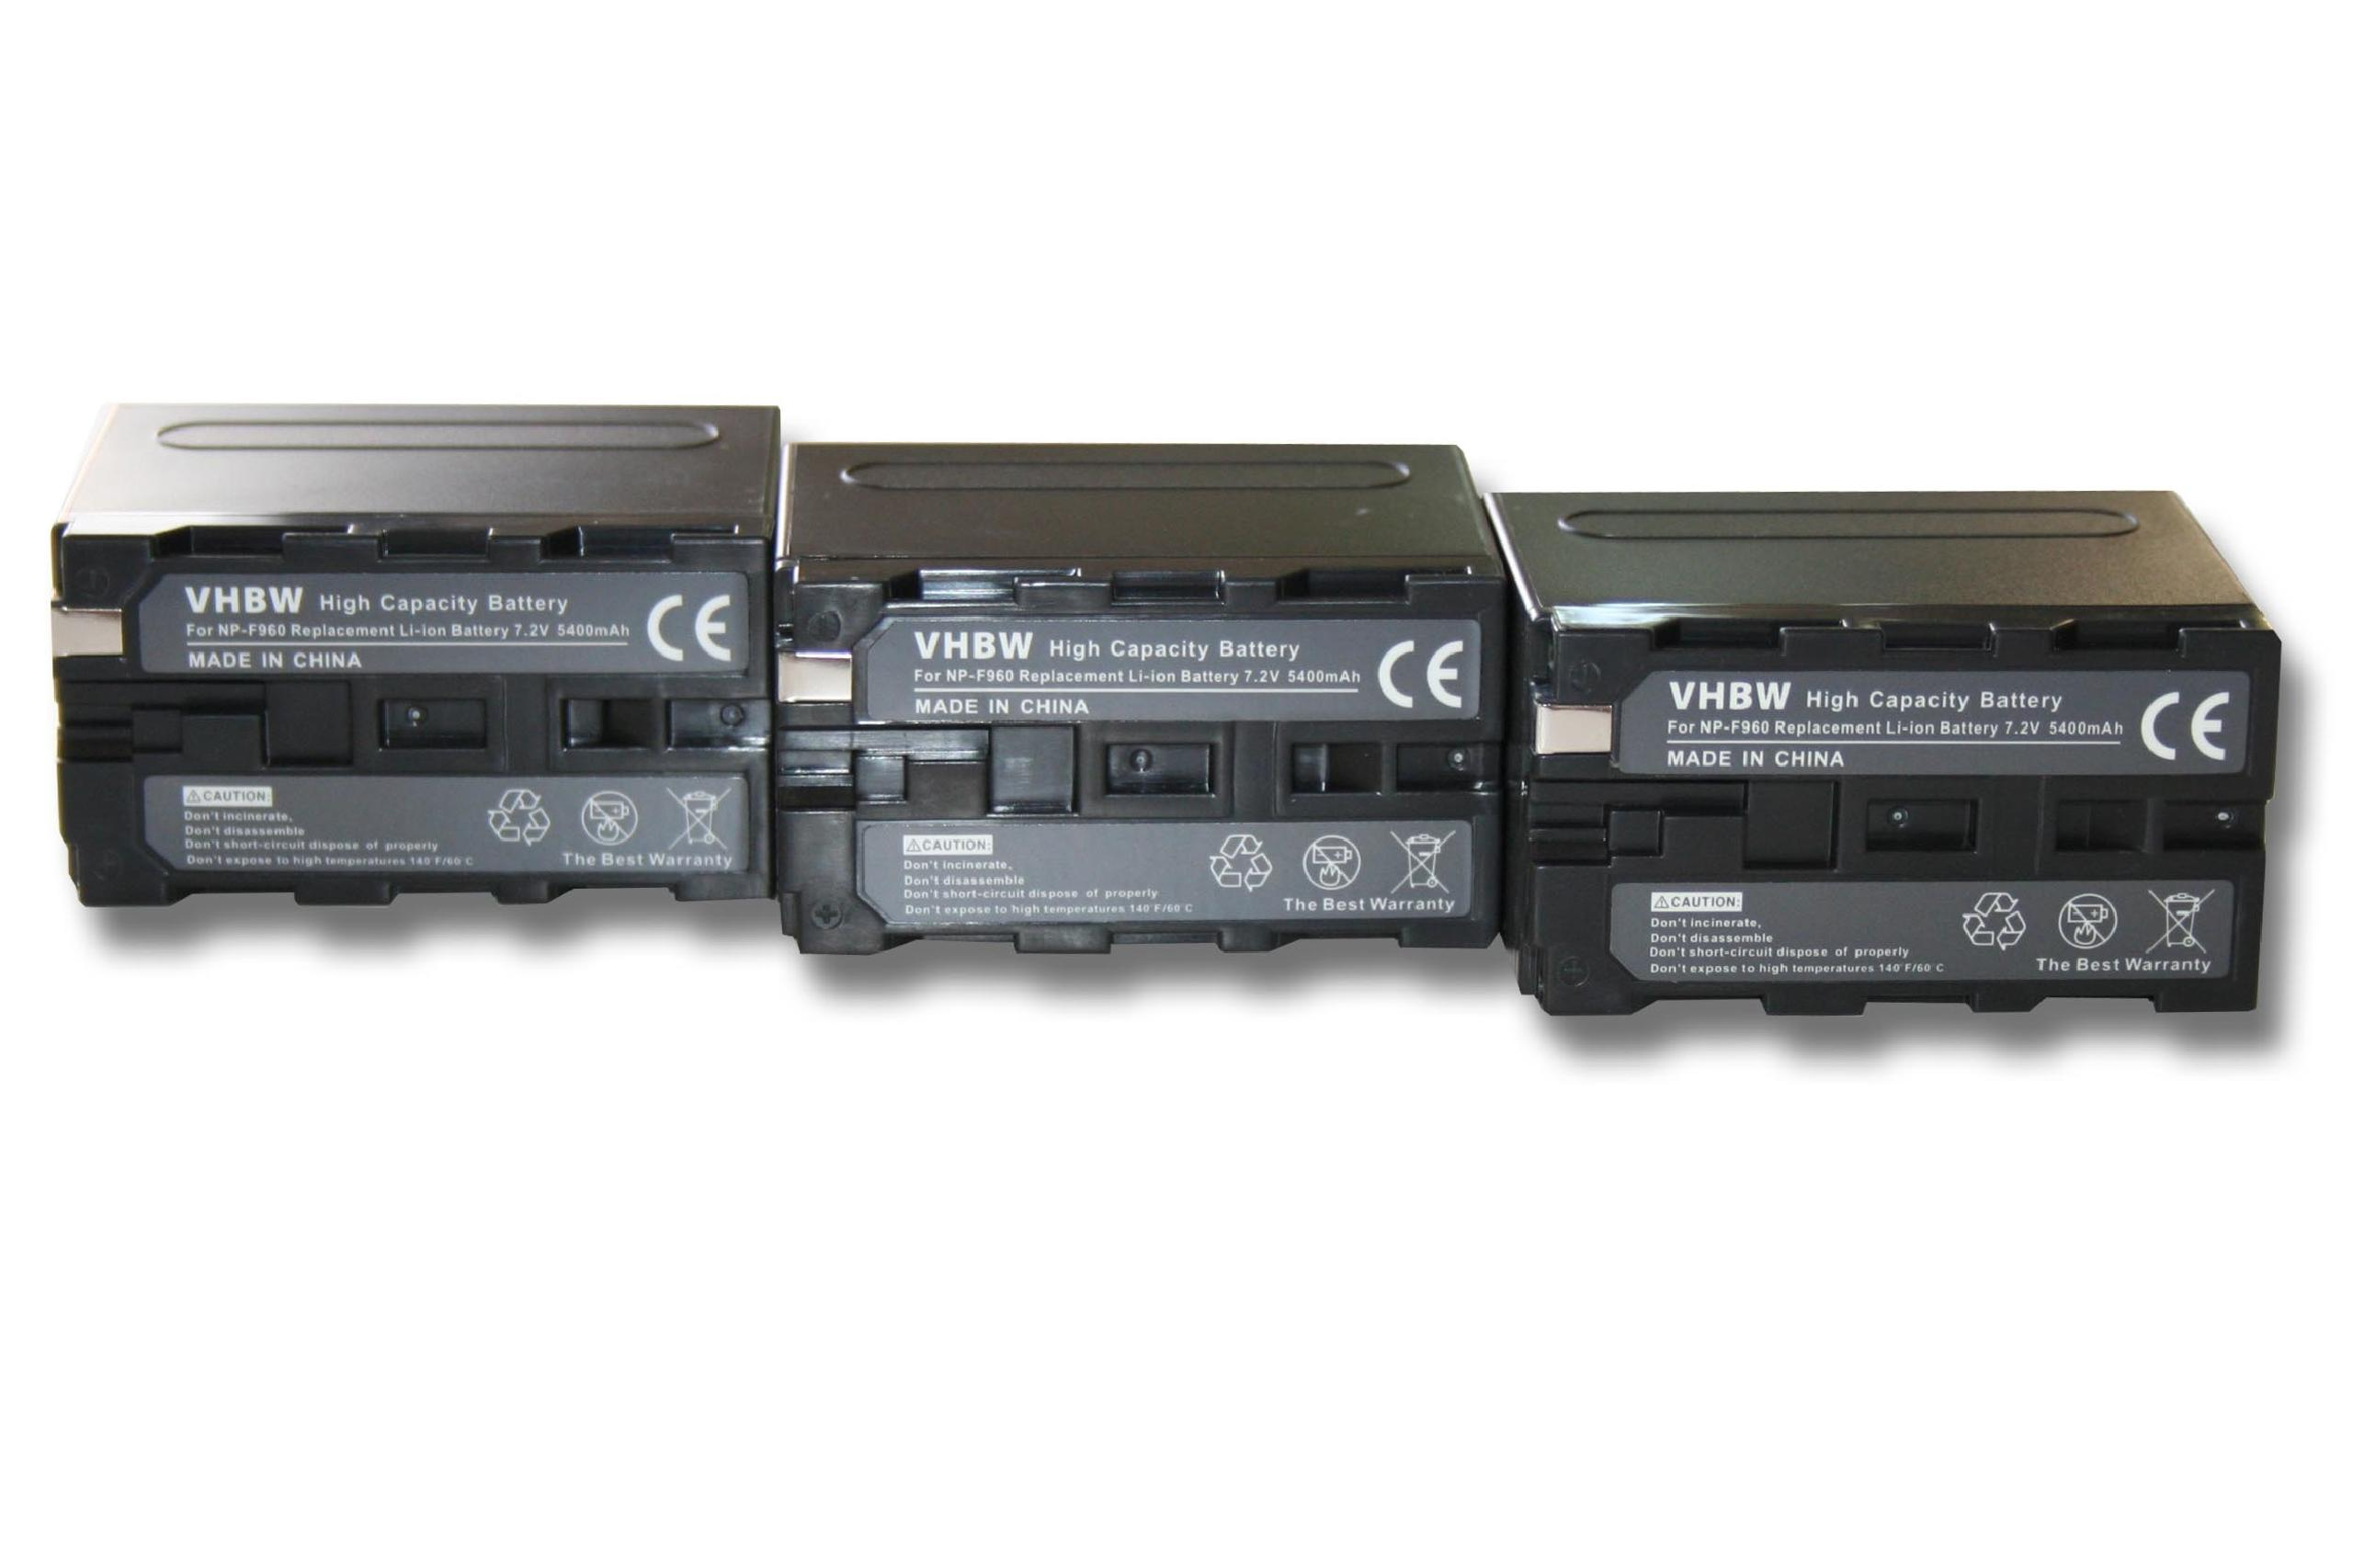 VHBW kompatibel mit Sony CCD-TRV517, Volt, CCD-TRV43, Li-Ion Akku - 6000 CCD-TRV4, CCD-TRV51 7.2 CCD-TRV41, Videokamera, CCD-TRV46